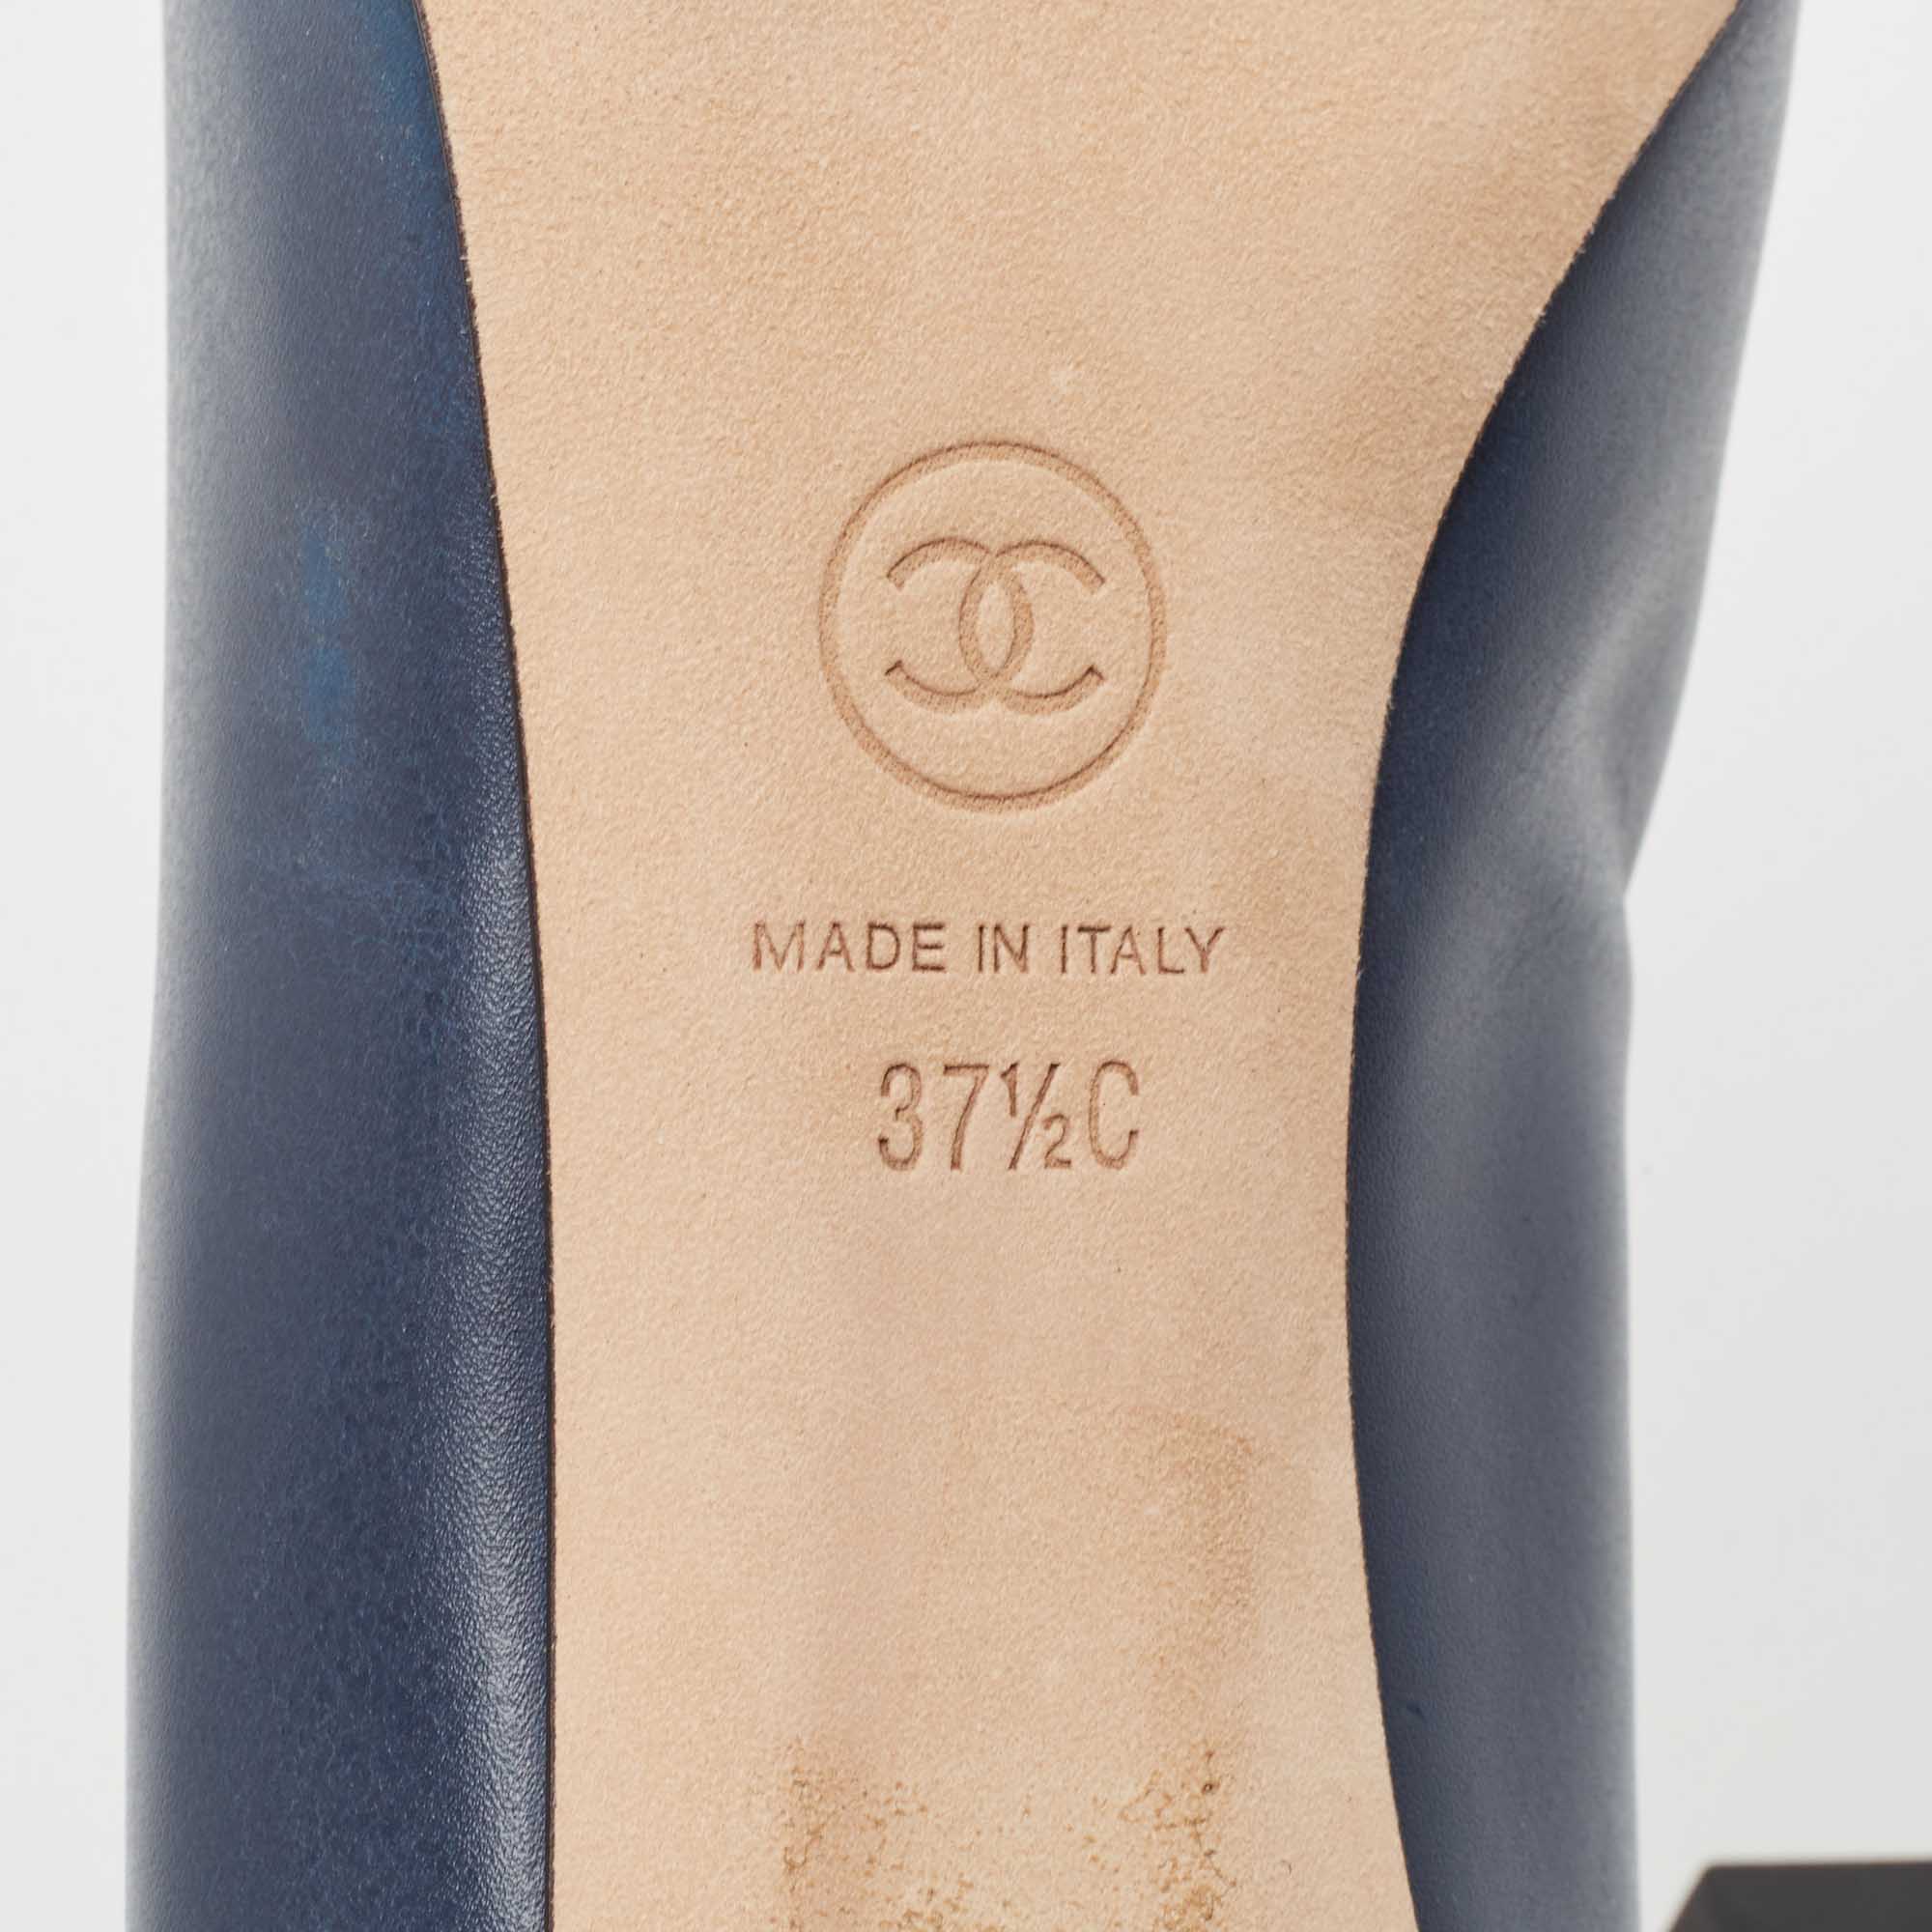 Chanel Navy Blue Leather Cap Toe Pumps Size 37.5